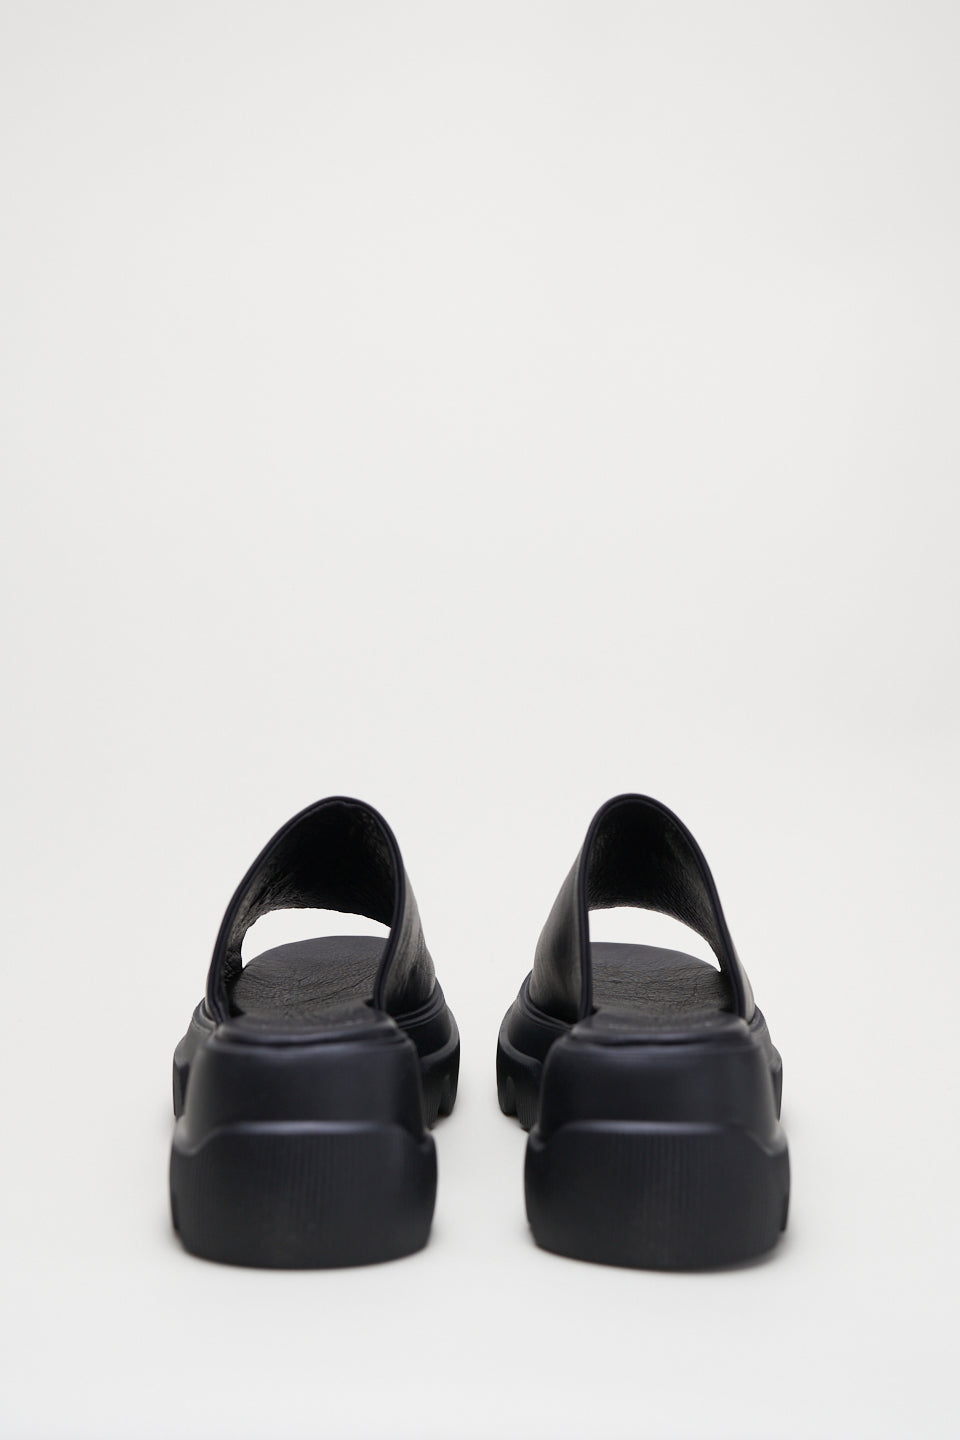 Vitello Black Chunky Slides Sandals CPH231BLACK - 5